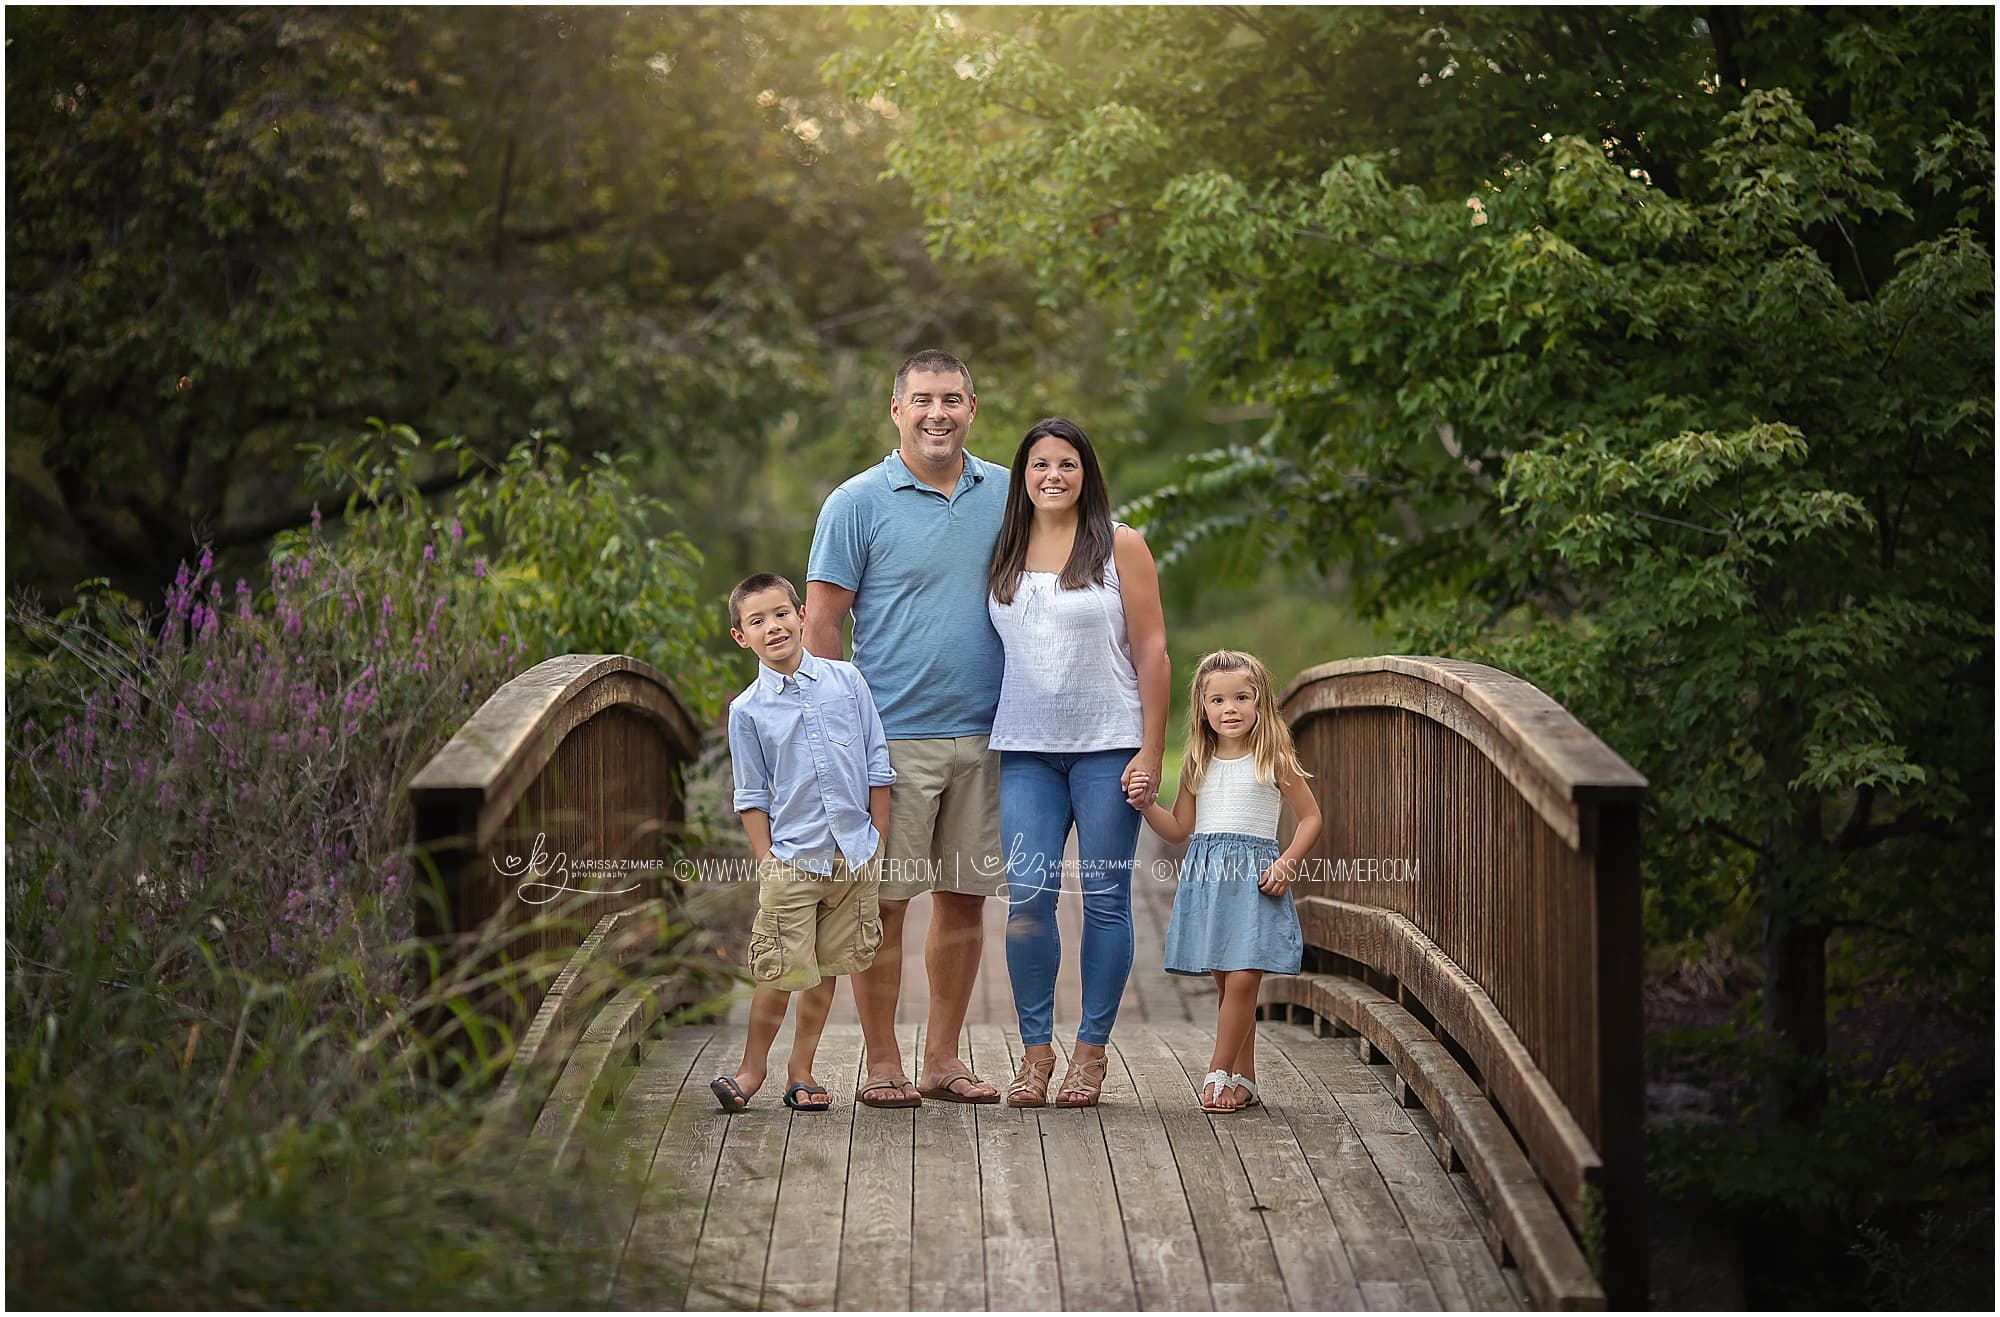 Hershey outdoor family photo, Hershey PA Family Photographer, family photography in Hershey PA, Hershey photographer, family photography packages